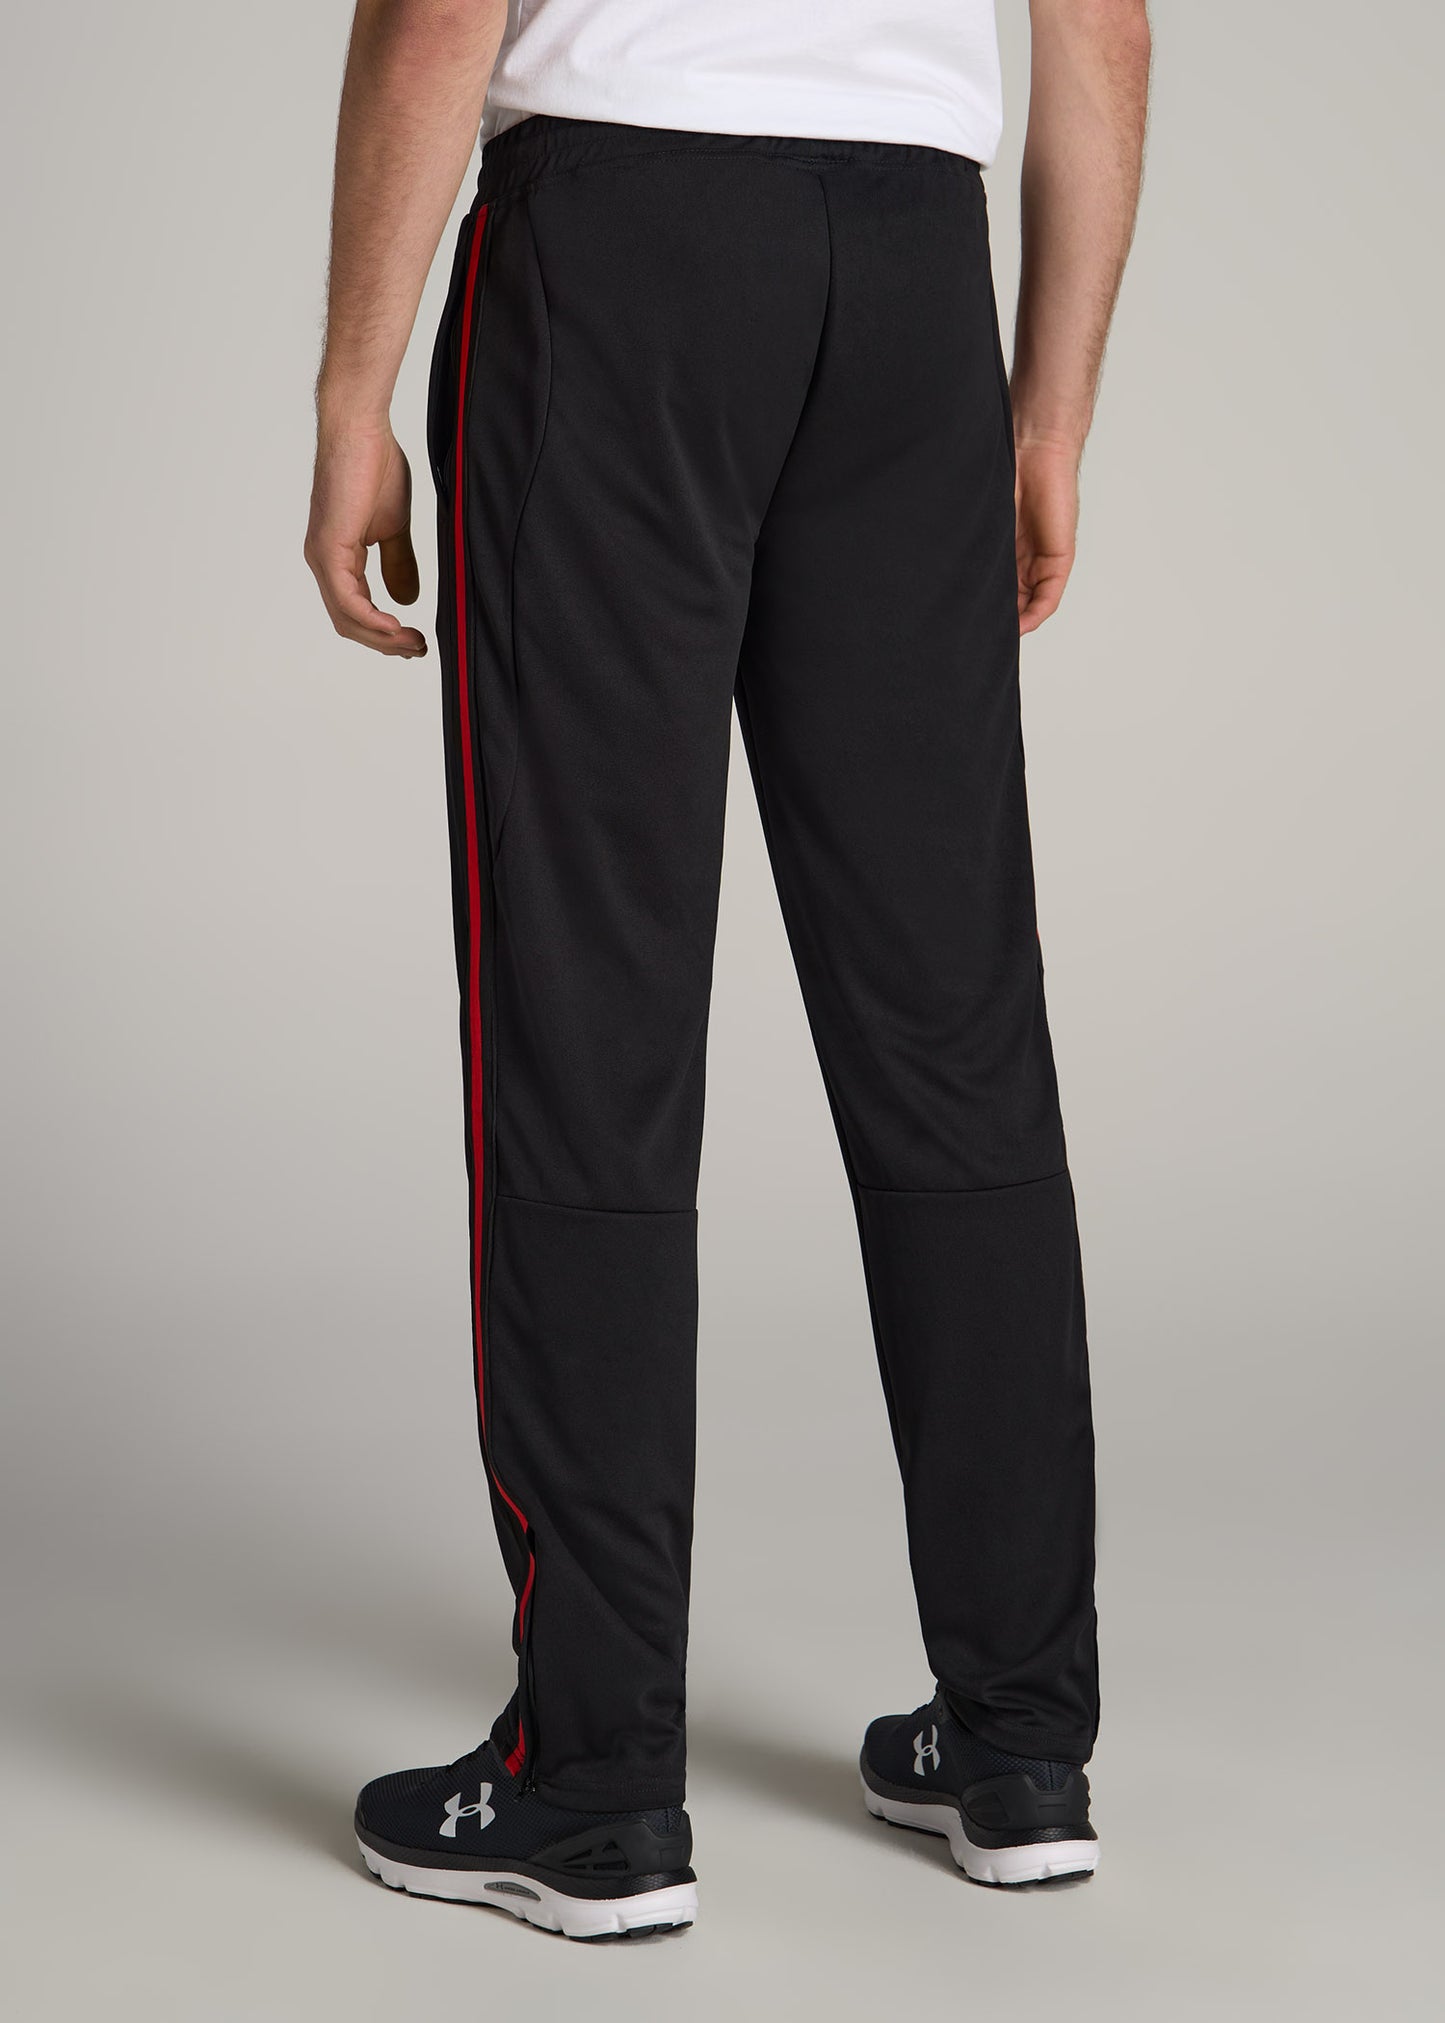 Athletic Stripe Pants for Tall Men in Black-Red Stripe